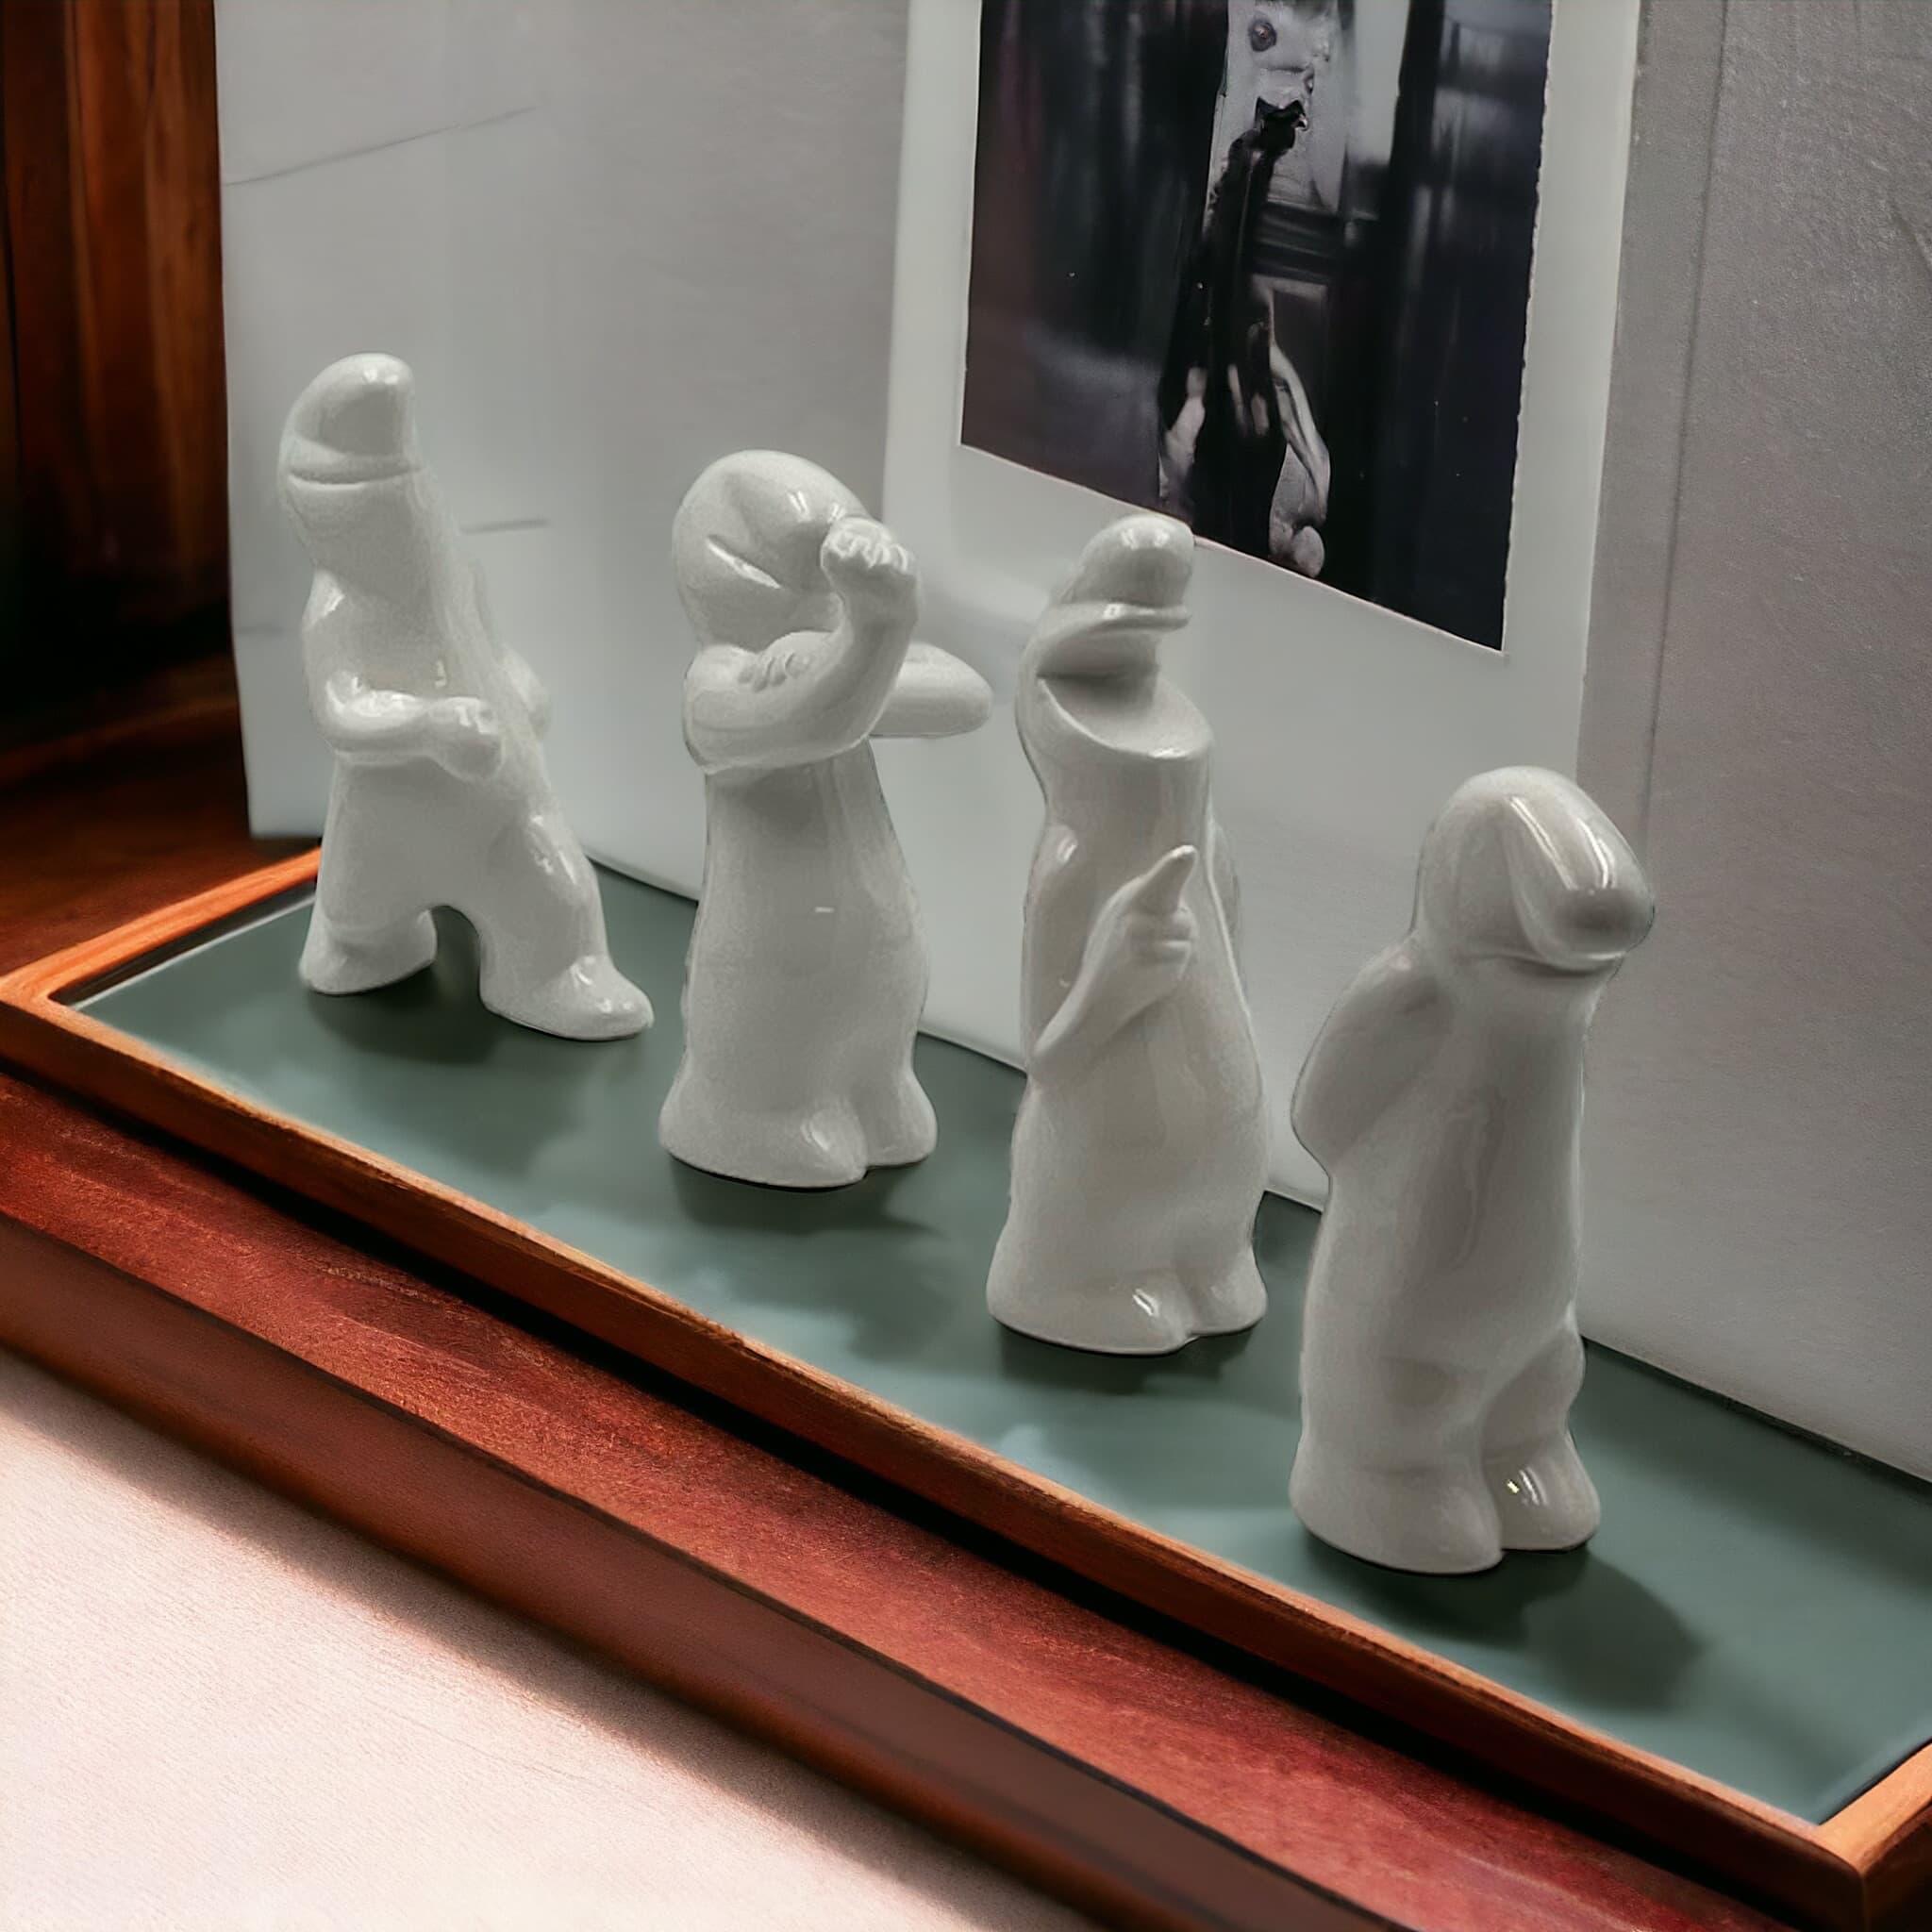 Osvaldo Cavandoli 'La Linea' - Pop Art 1960s - Set of Four Ceramic Figurines 1